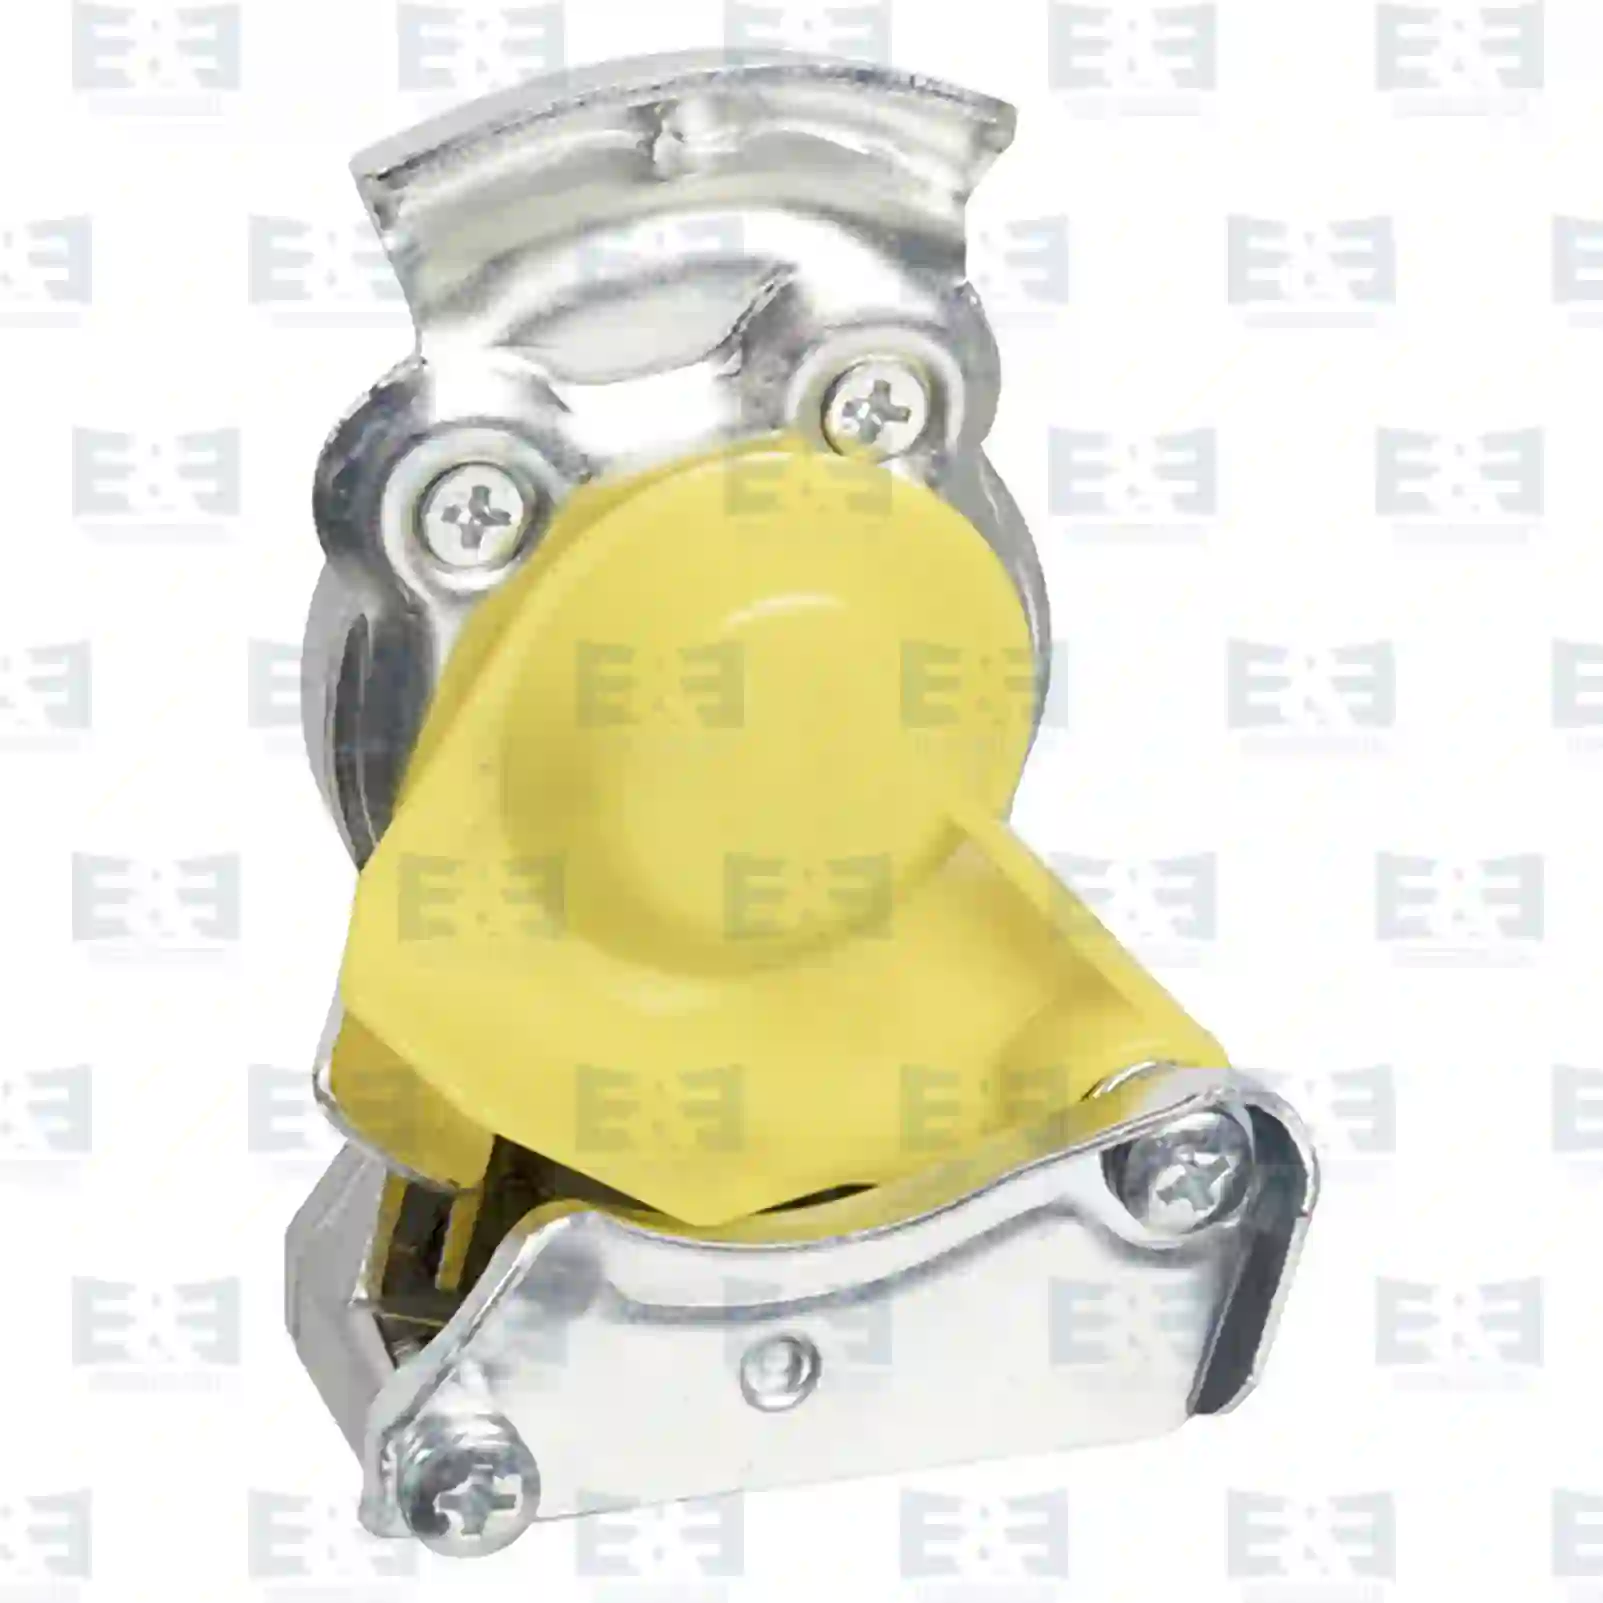  Palm coupling, automatic shutter, yellow lid || E&E Truck Spare Parts | Truck Spare Parts, Auotomotive Spare Parts